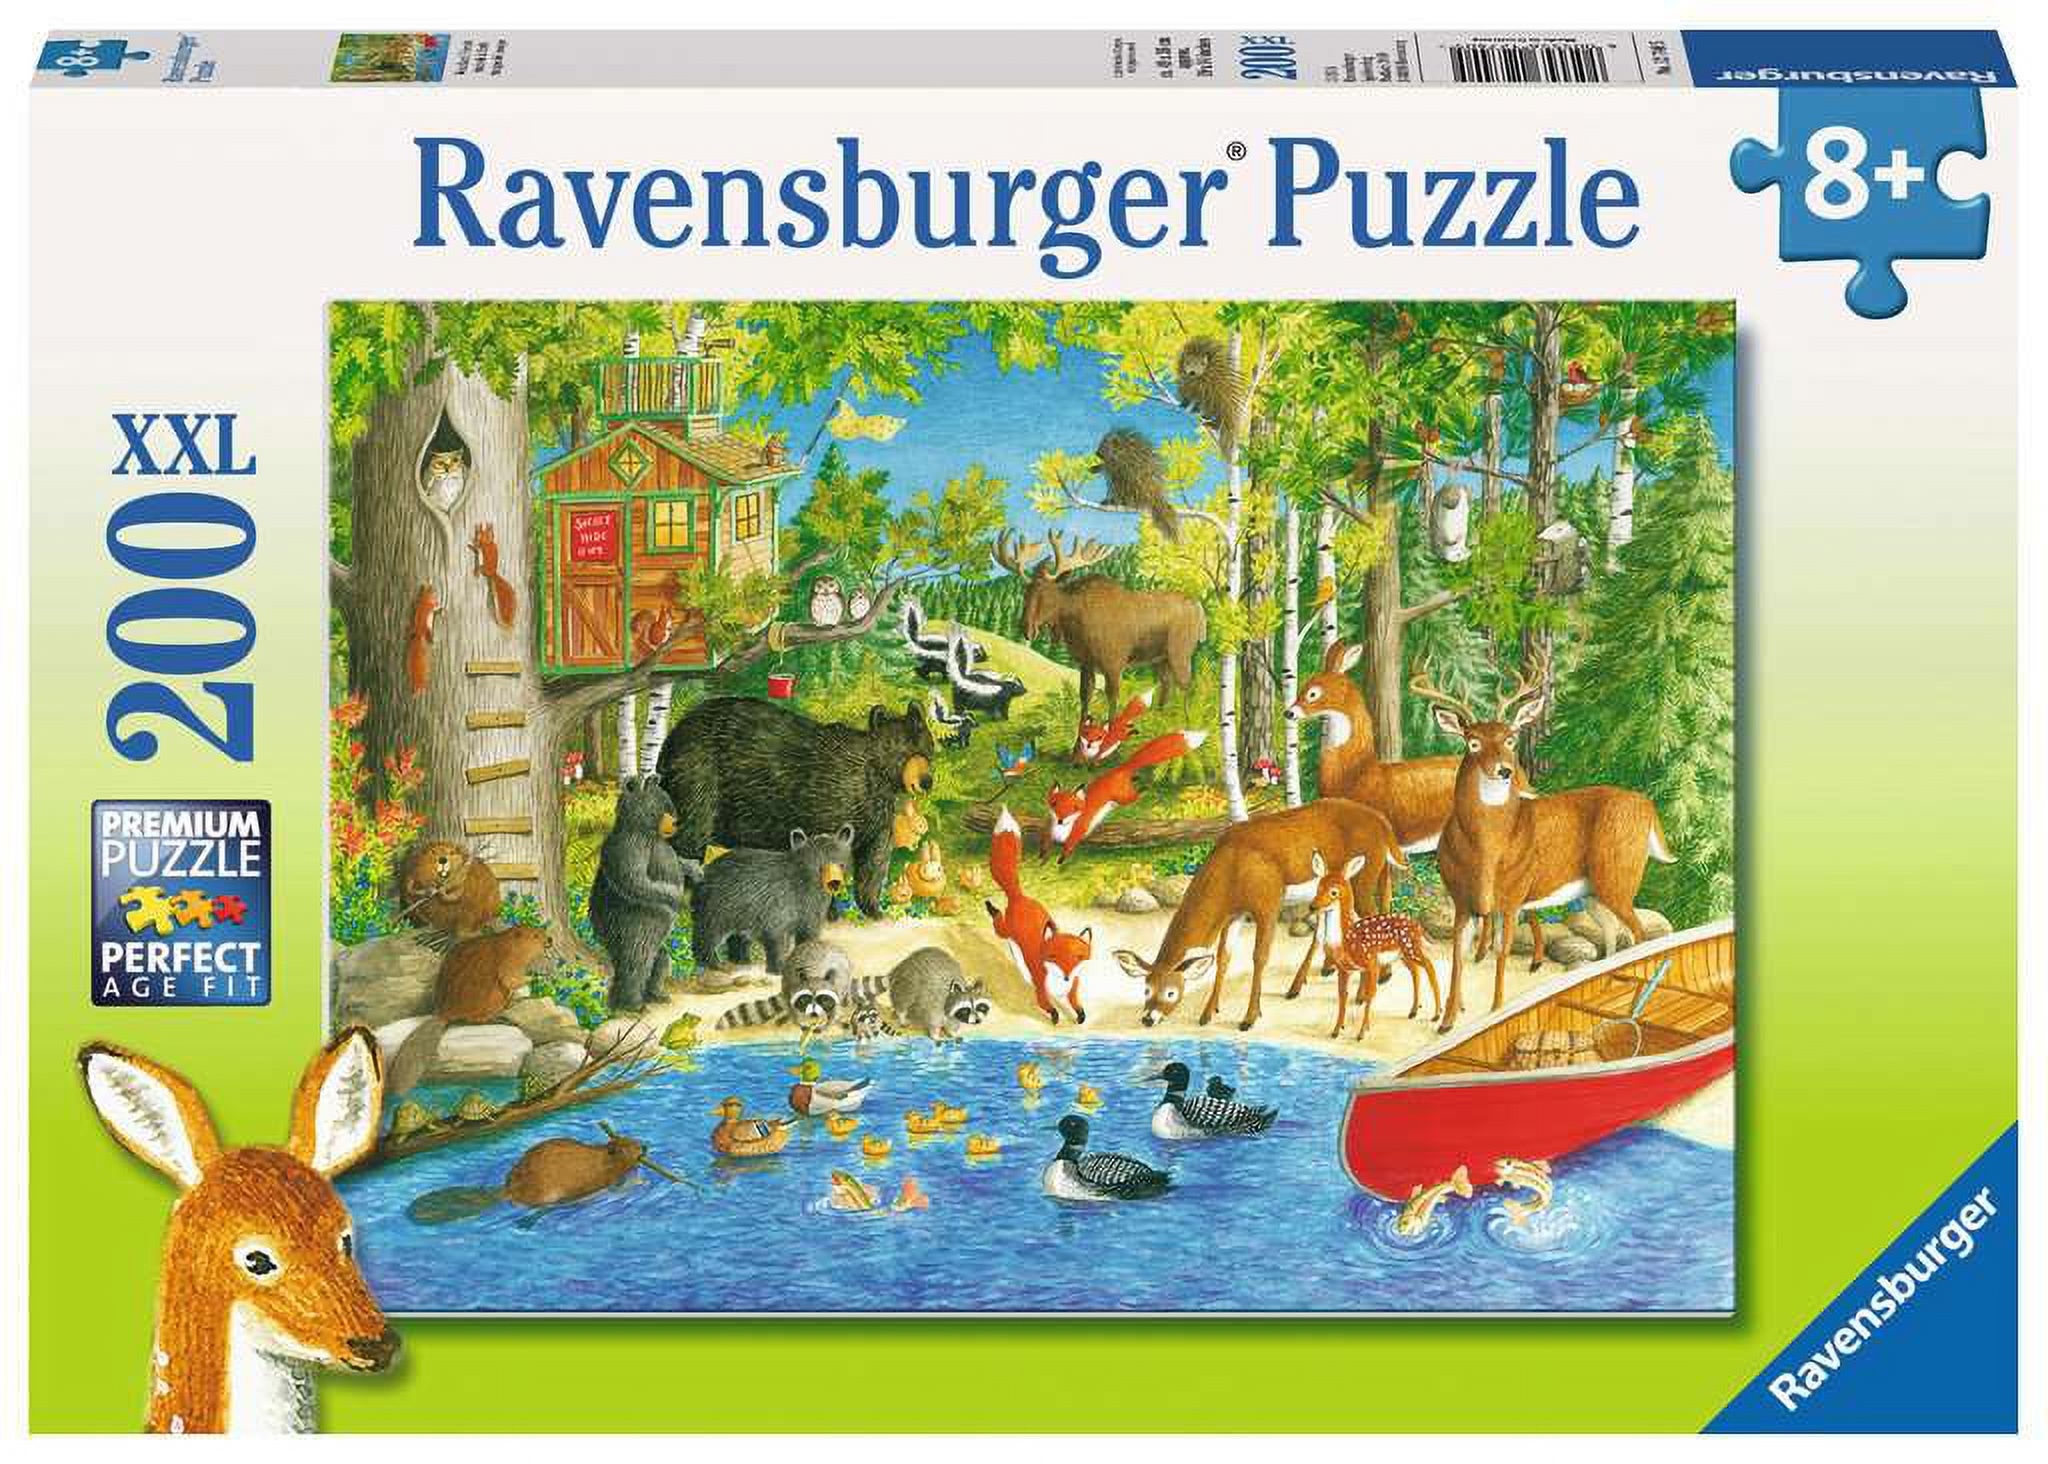 Ravensburger - Woodland Friends - 200 Piece Kids Jigsaw Puzzle - image 1 of 2